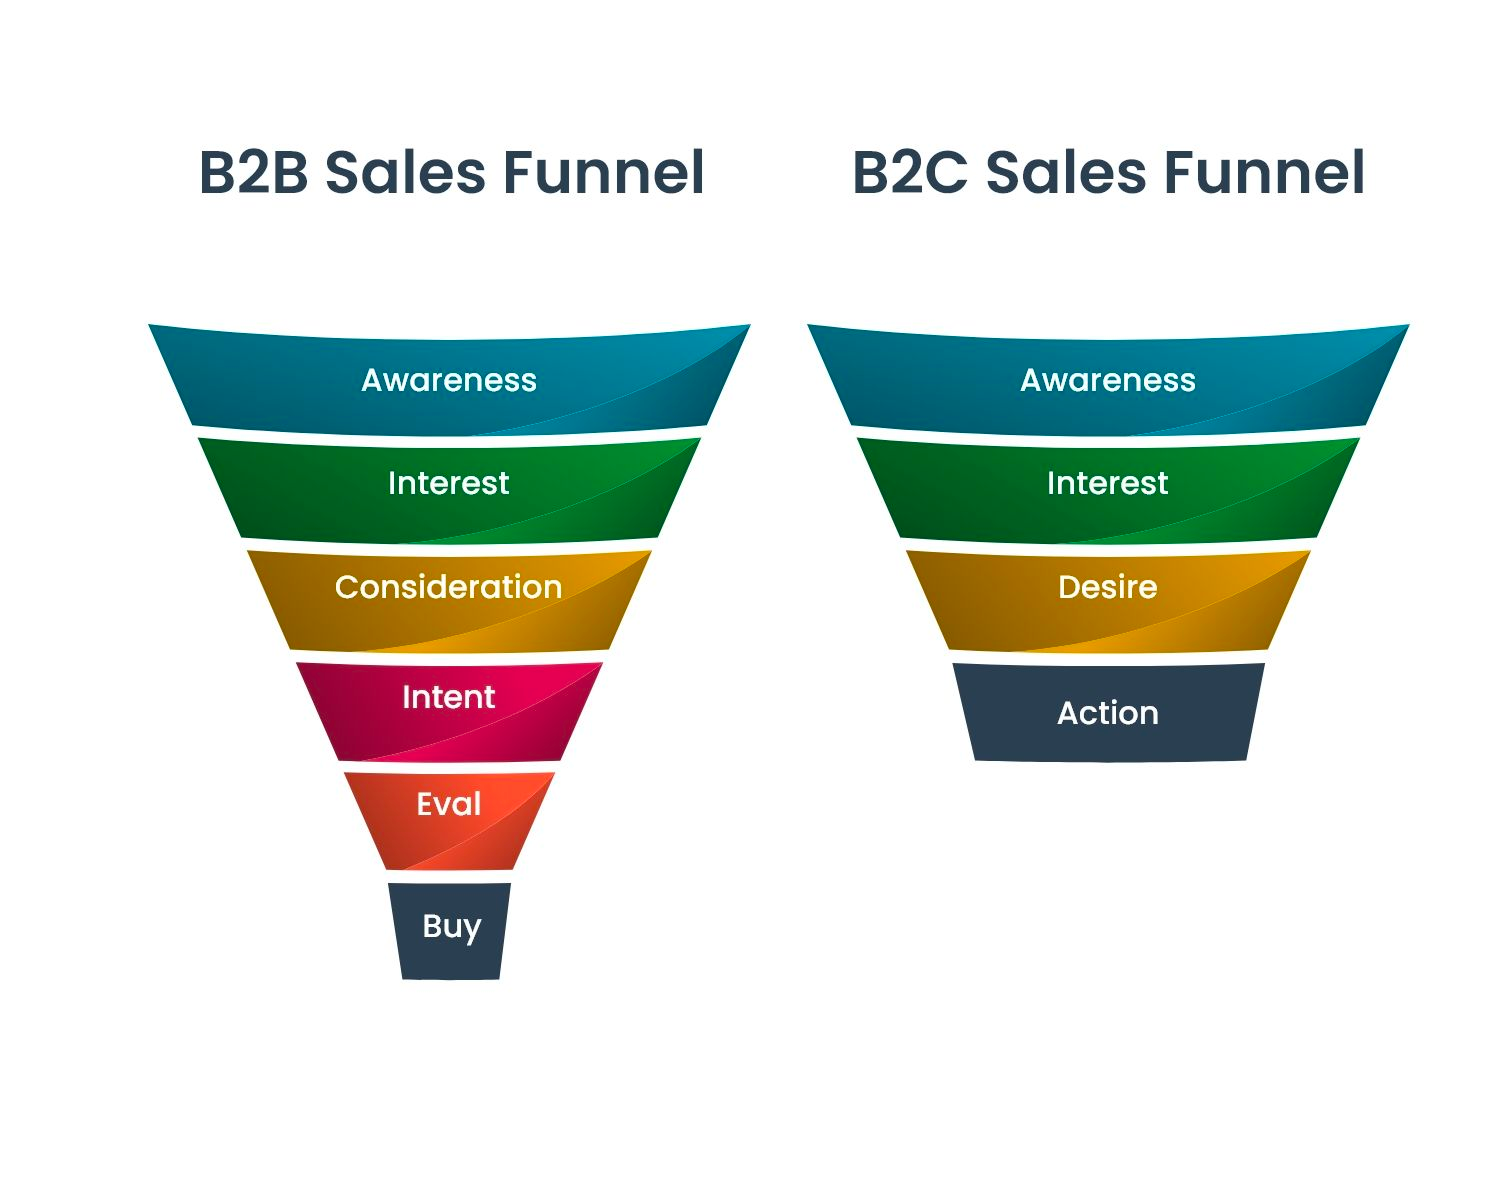 b2b vs b2c sales funnels